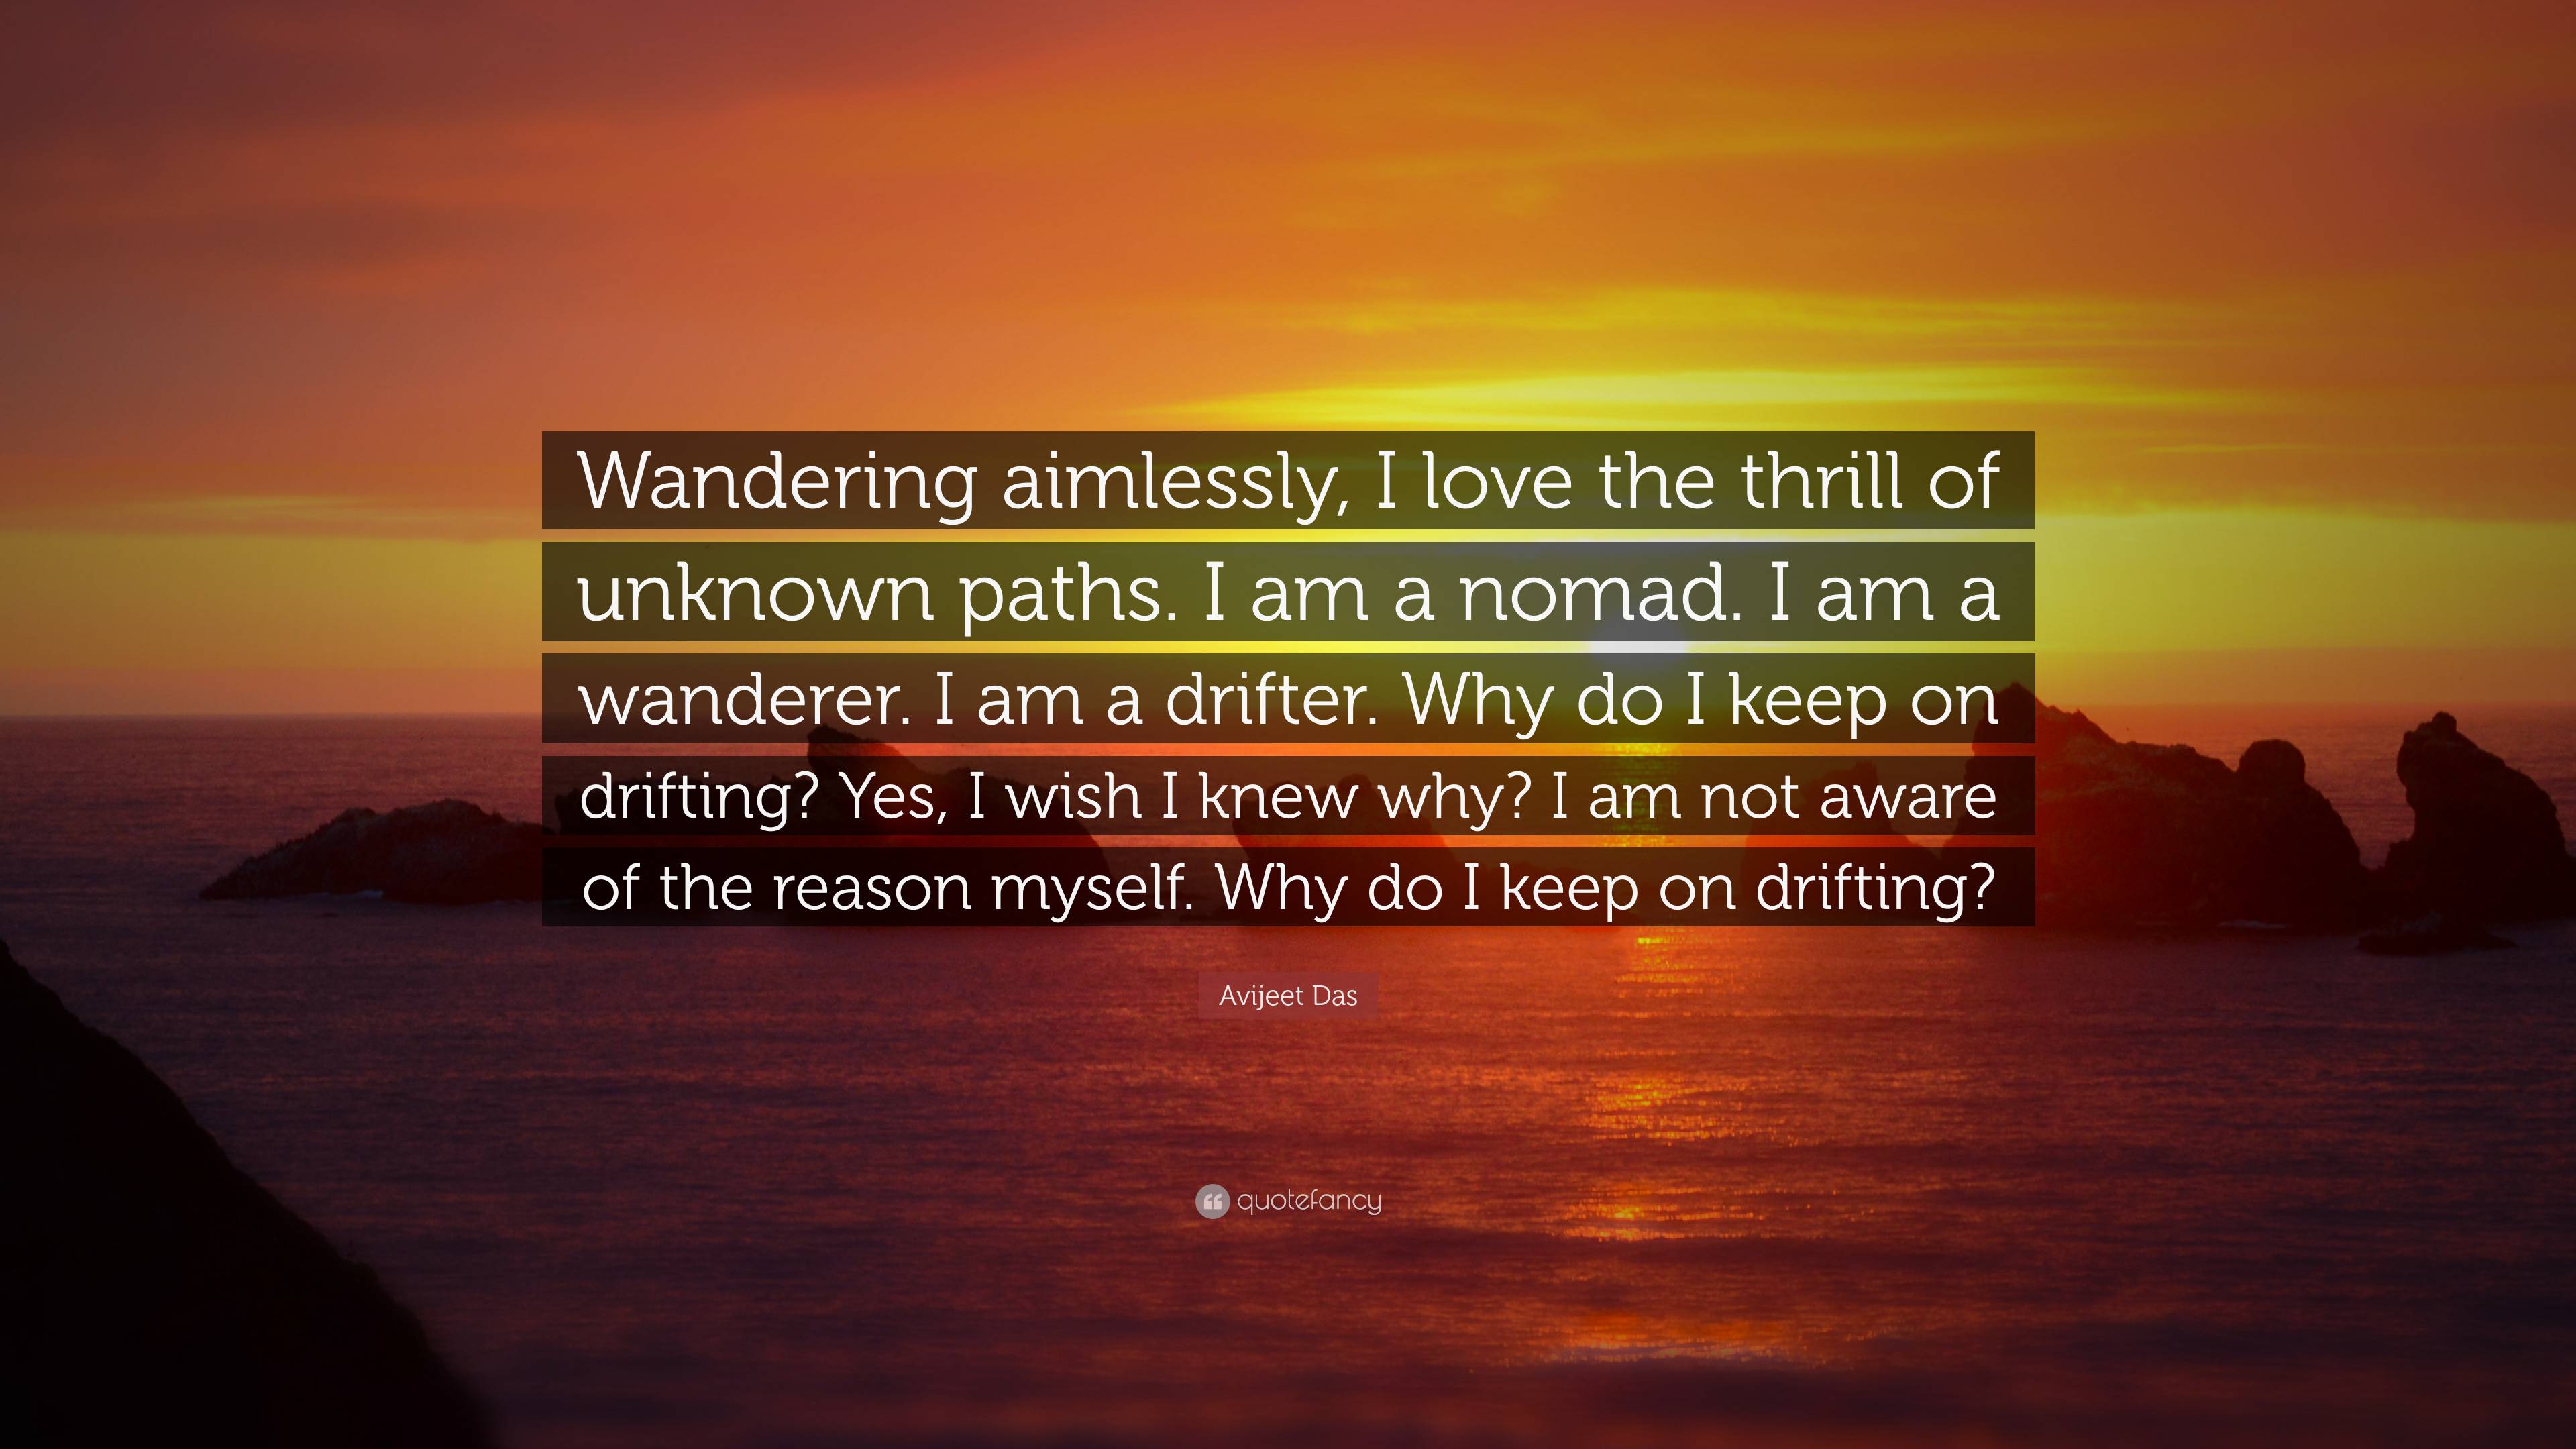 i'm wandering